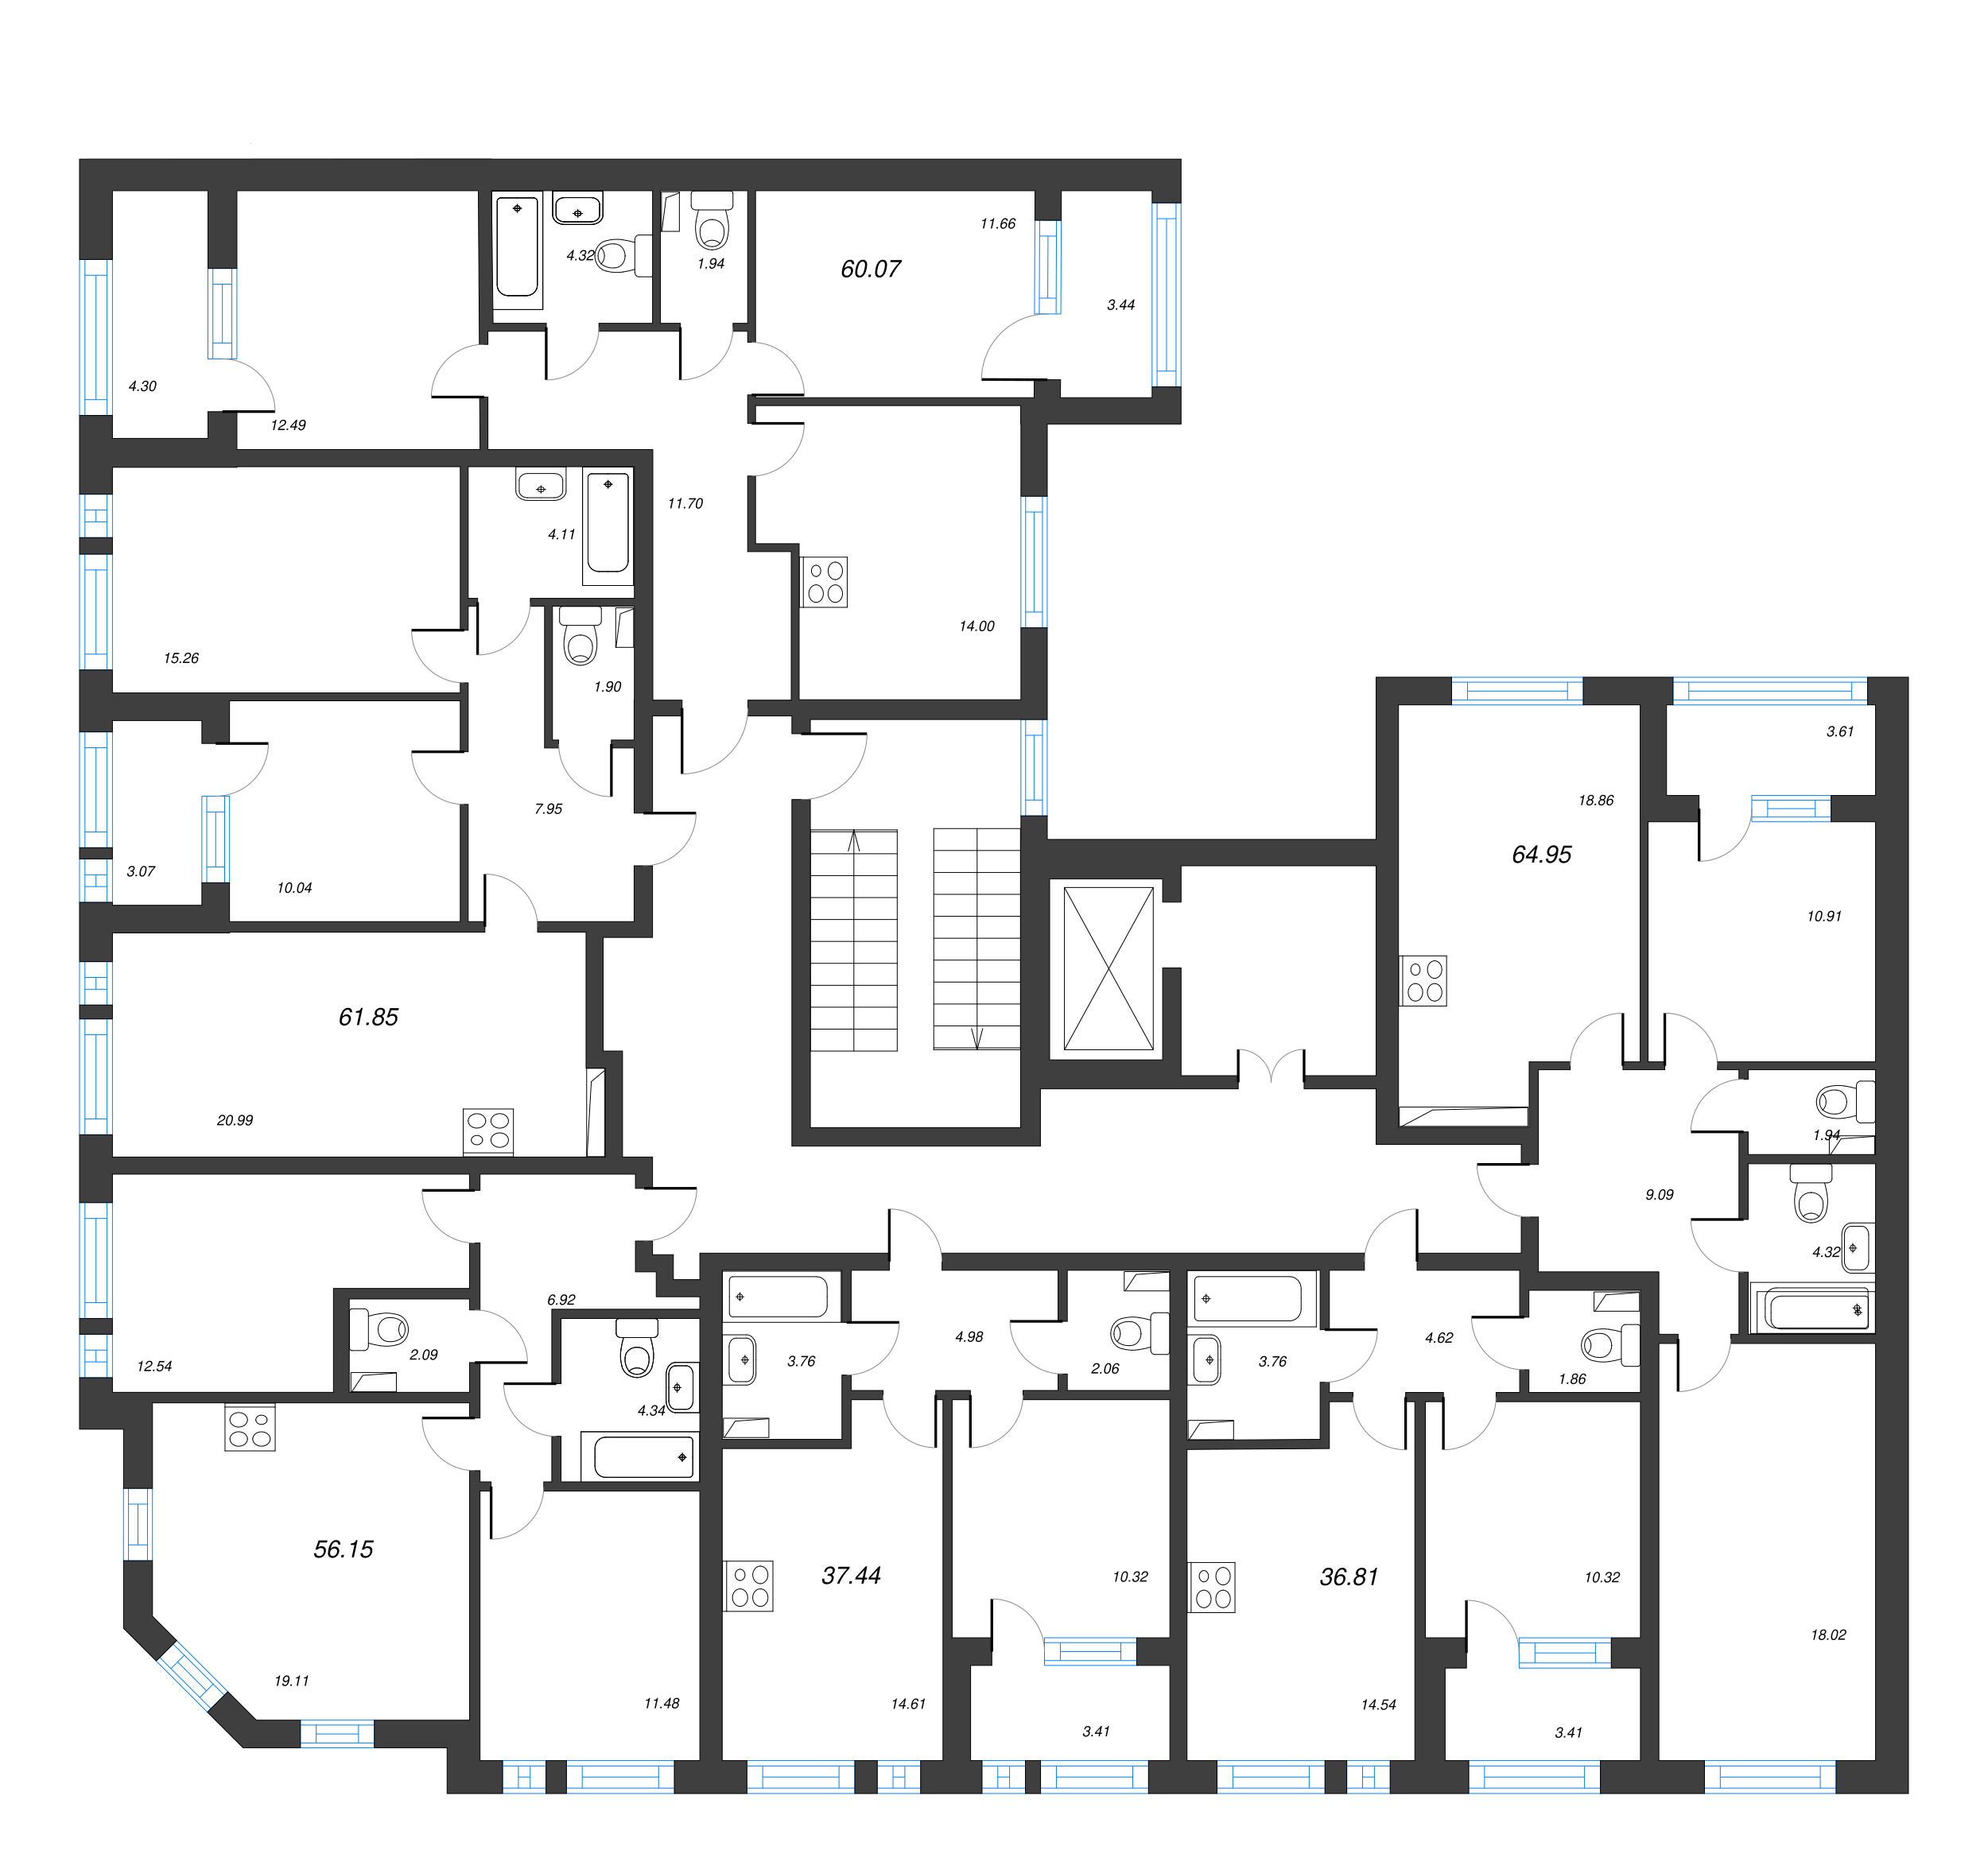 3-комнатная (Евро) квартира, 56.15 м² - планировка этажа